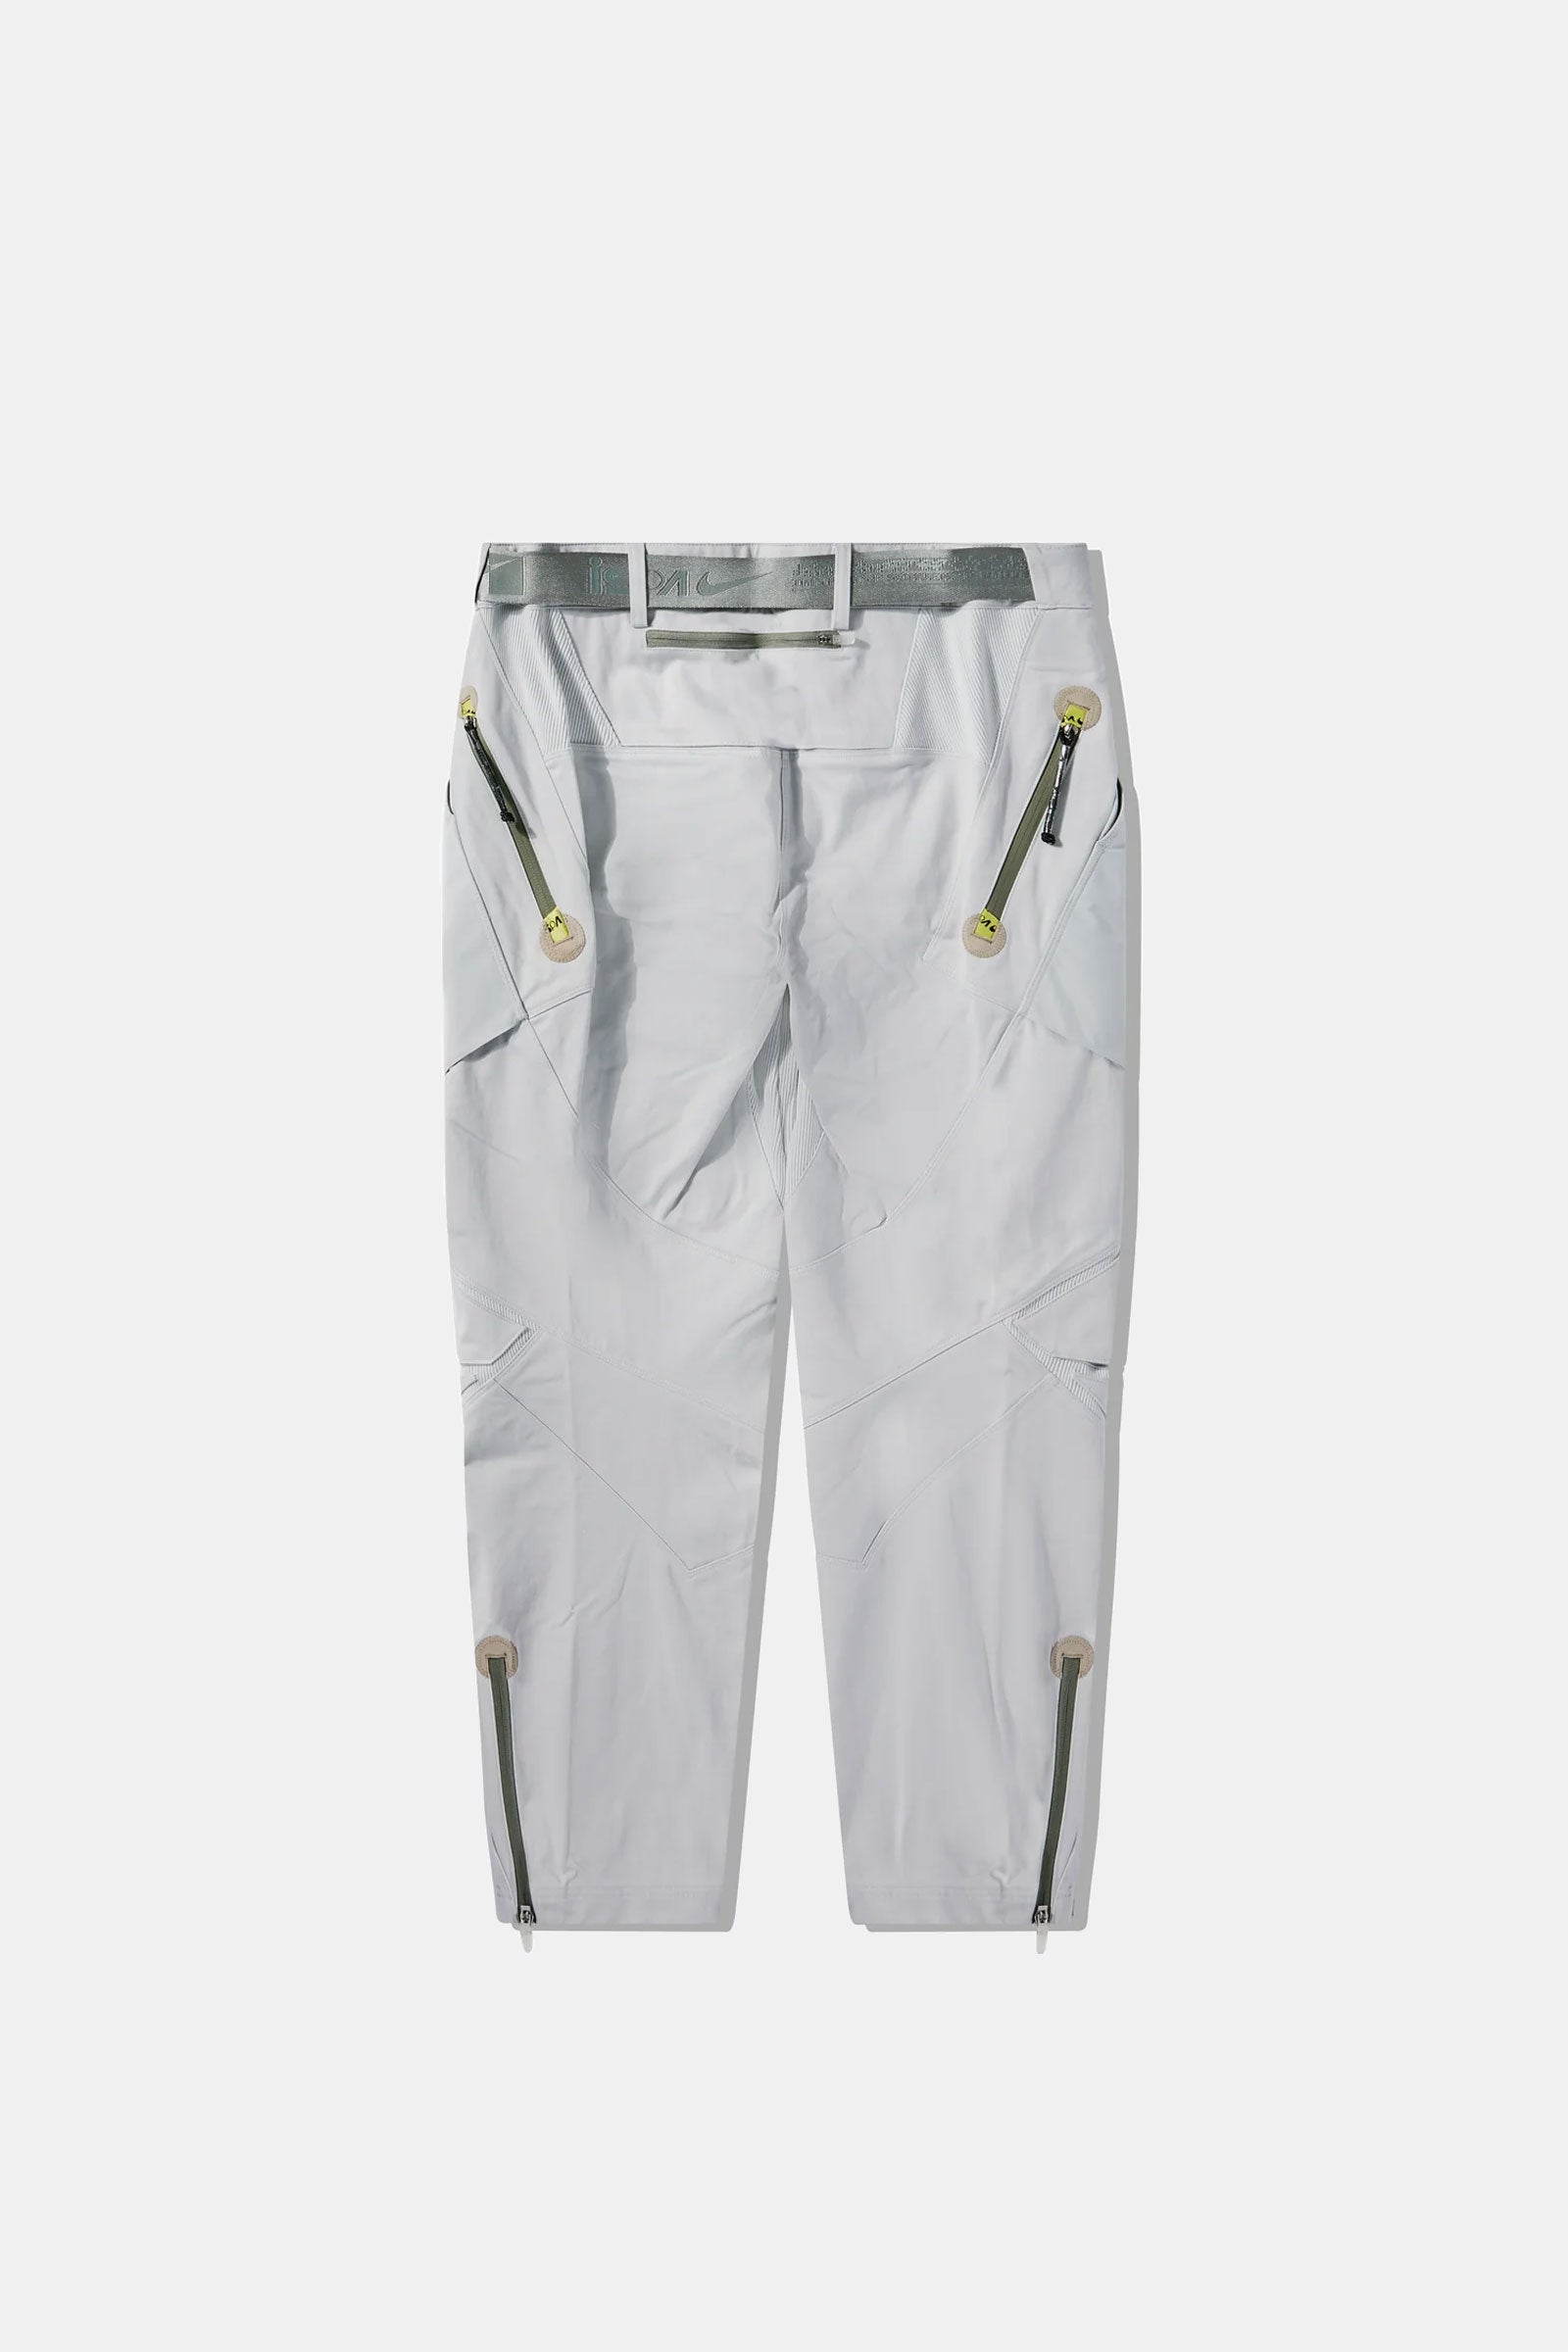 Nike ISPA Pants